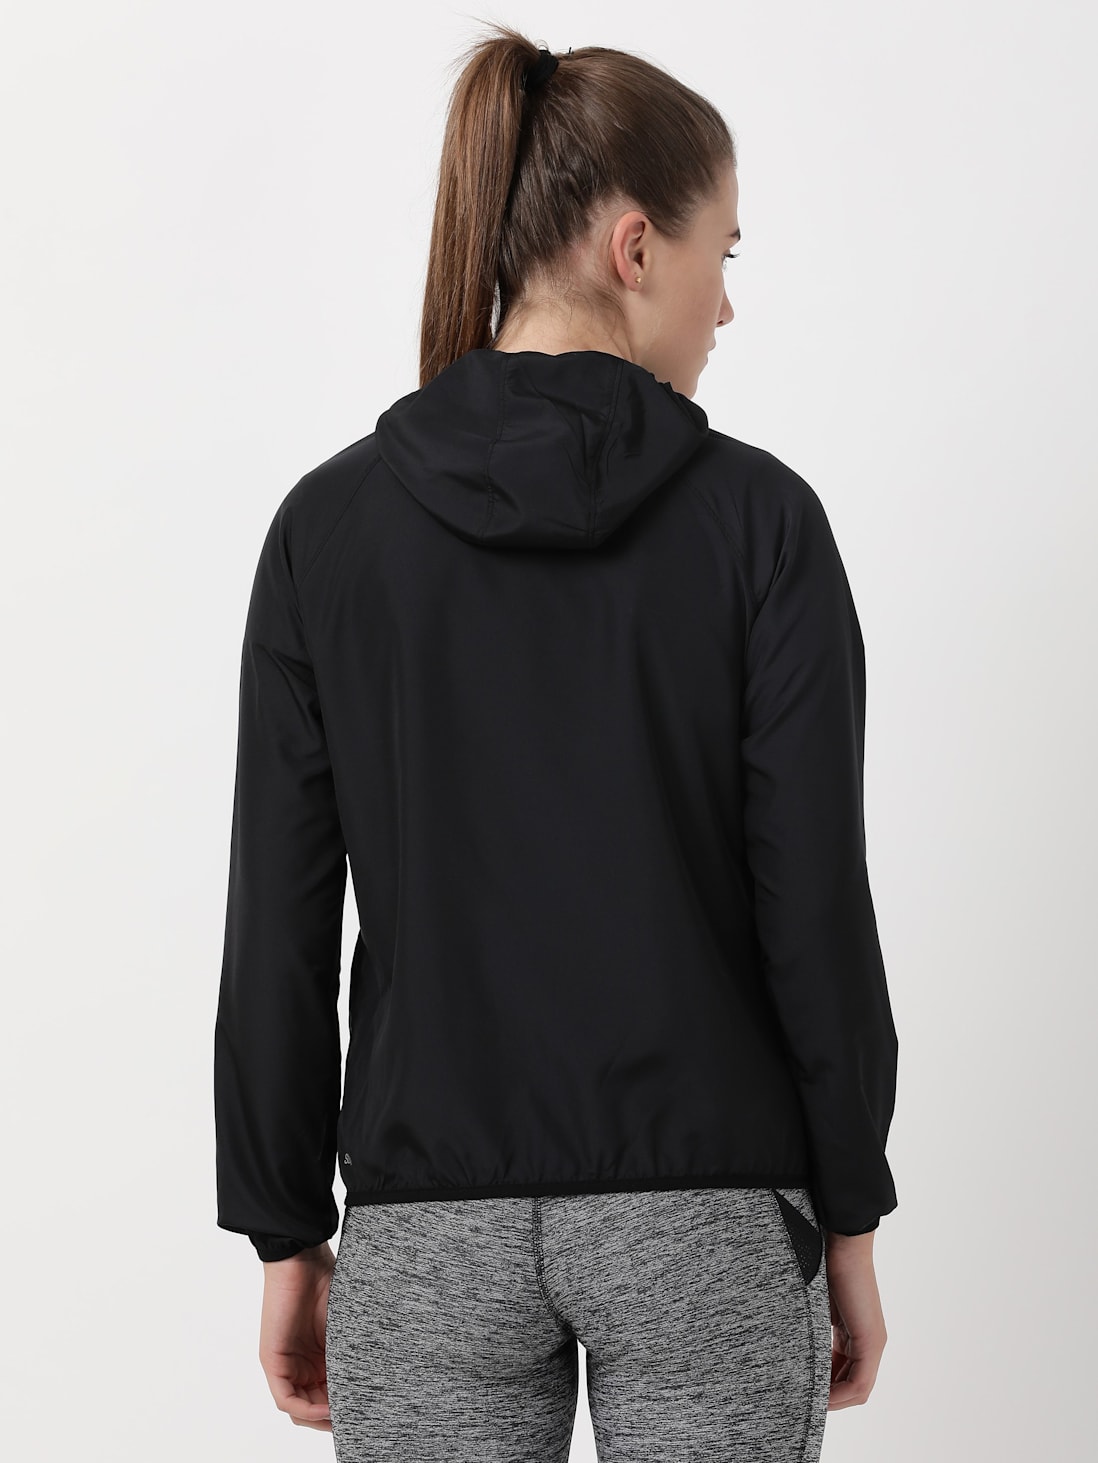 Buy Black Melange Jackets & Shrugs for Girls by Jockey Online | Ajio.com